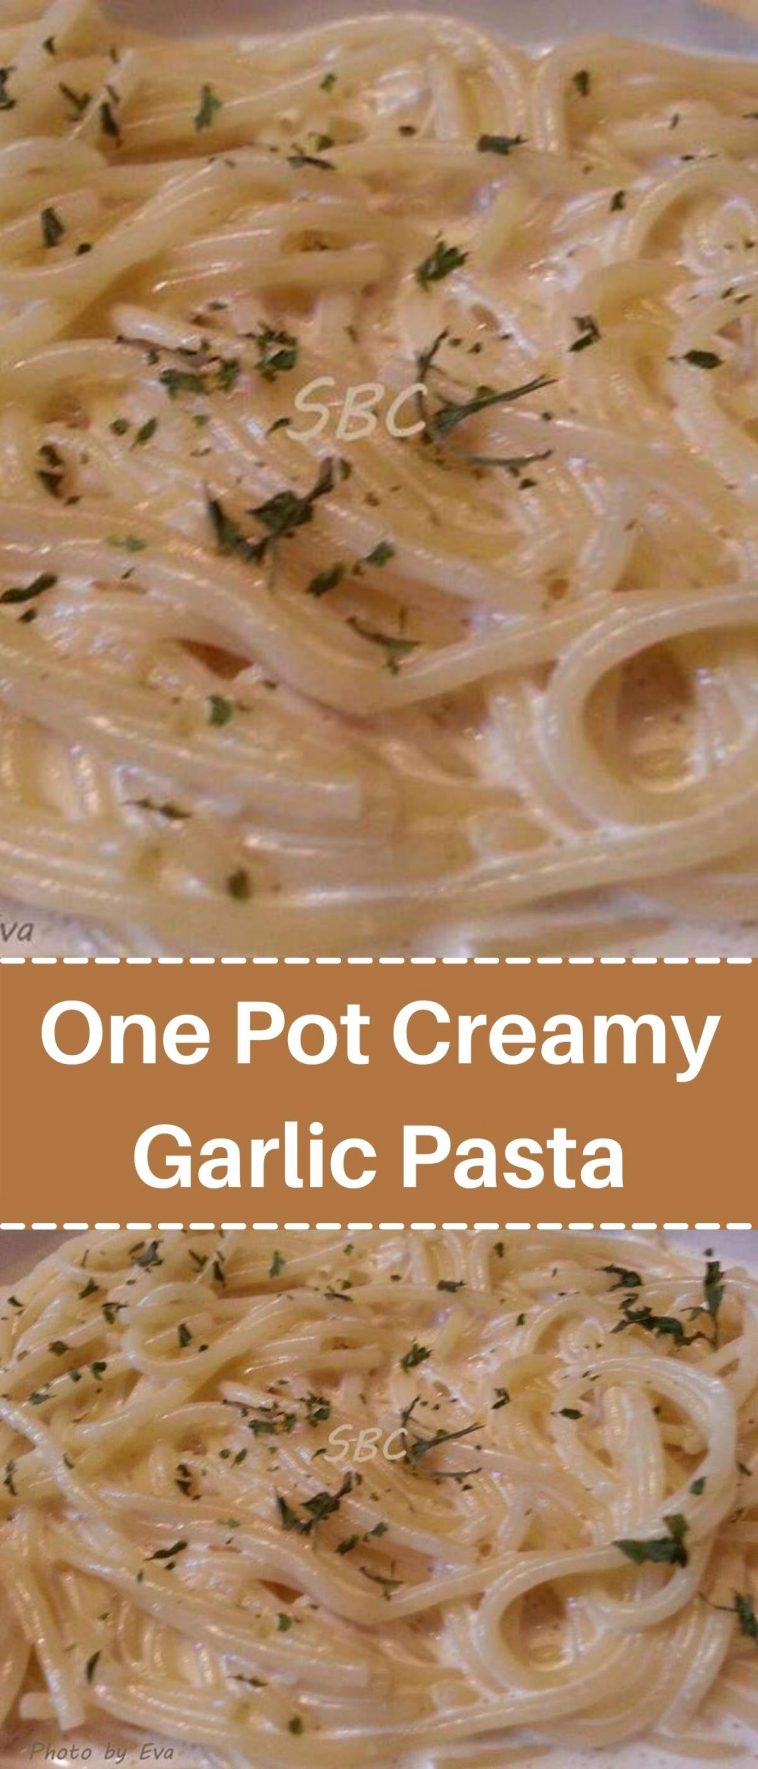 One Pot Creamy Garlic Pasta